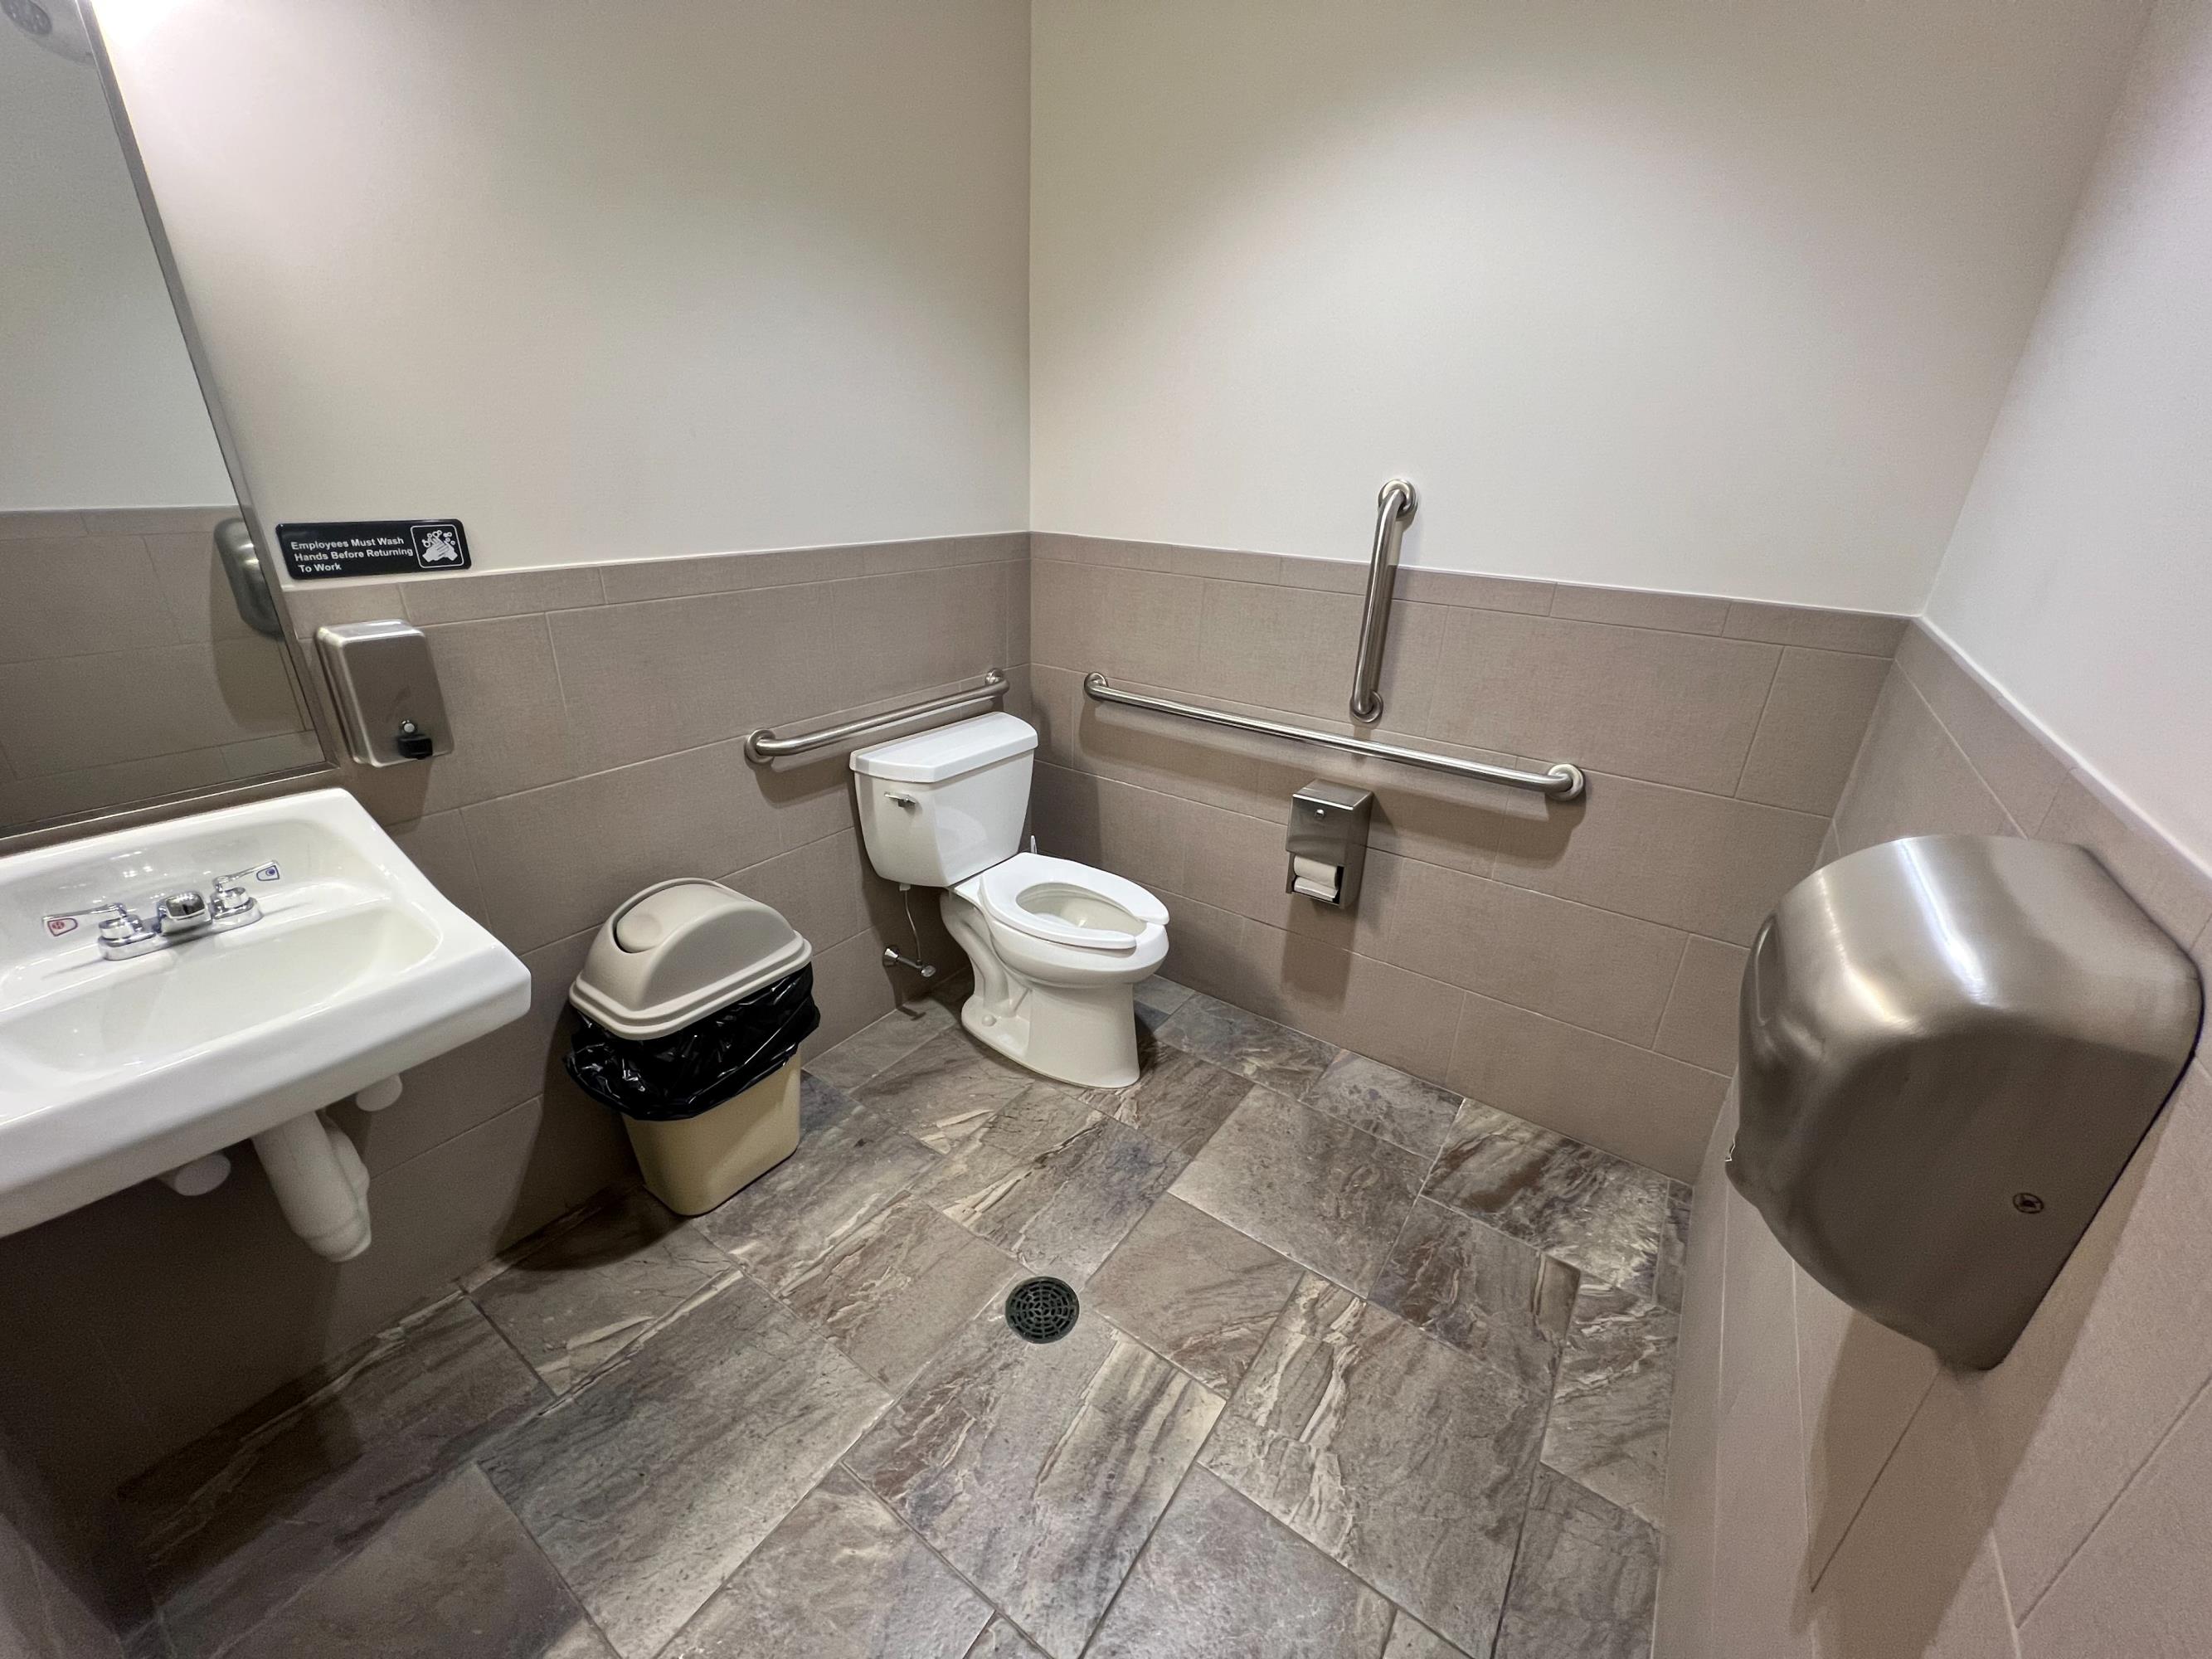 bathroom with handicap features